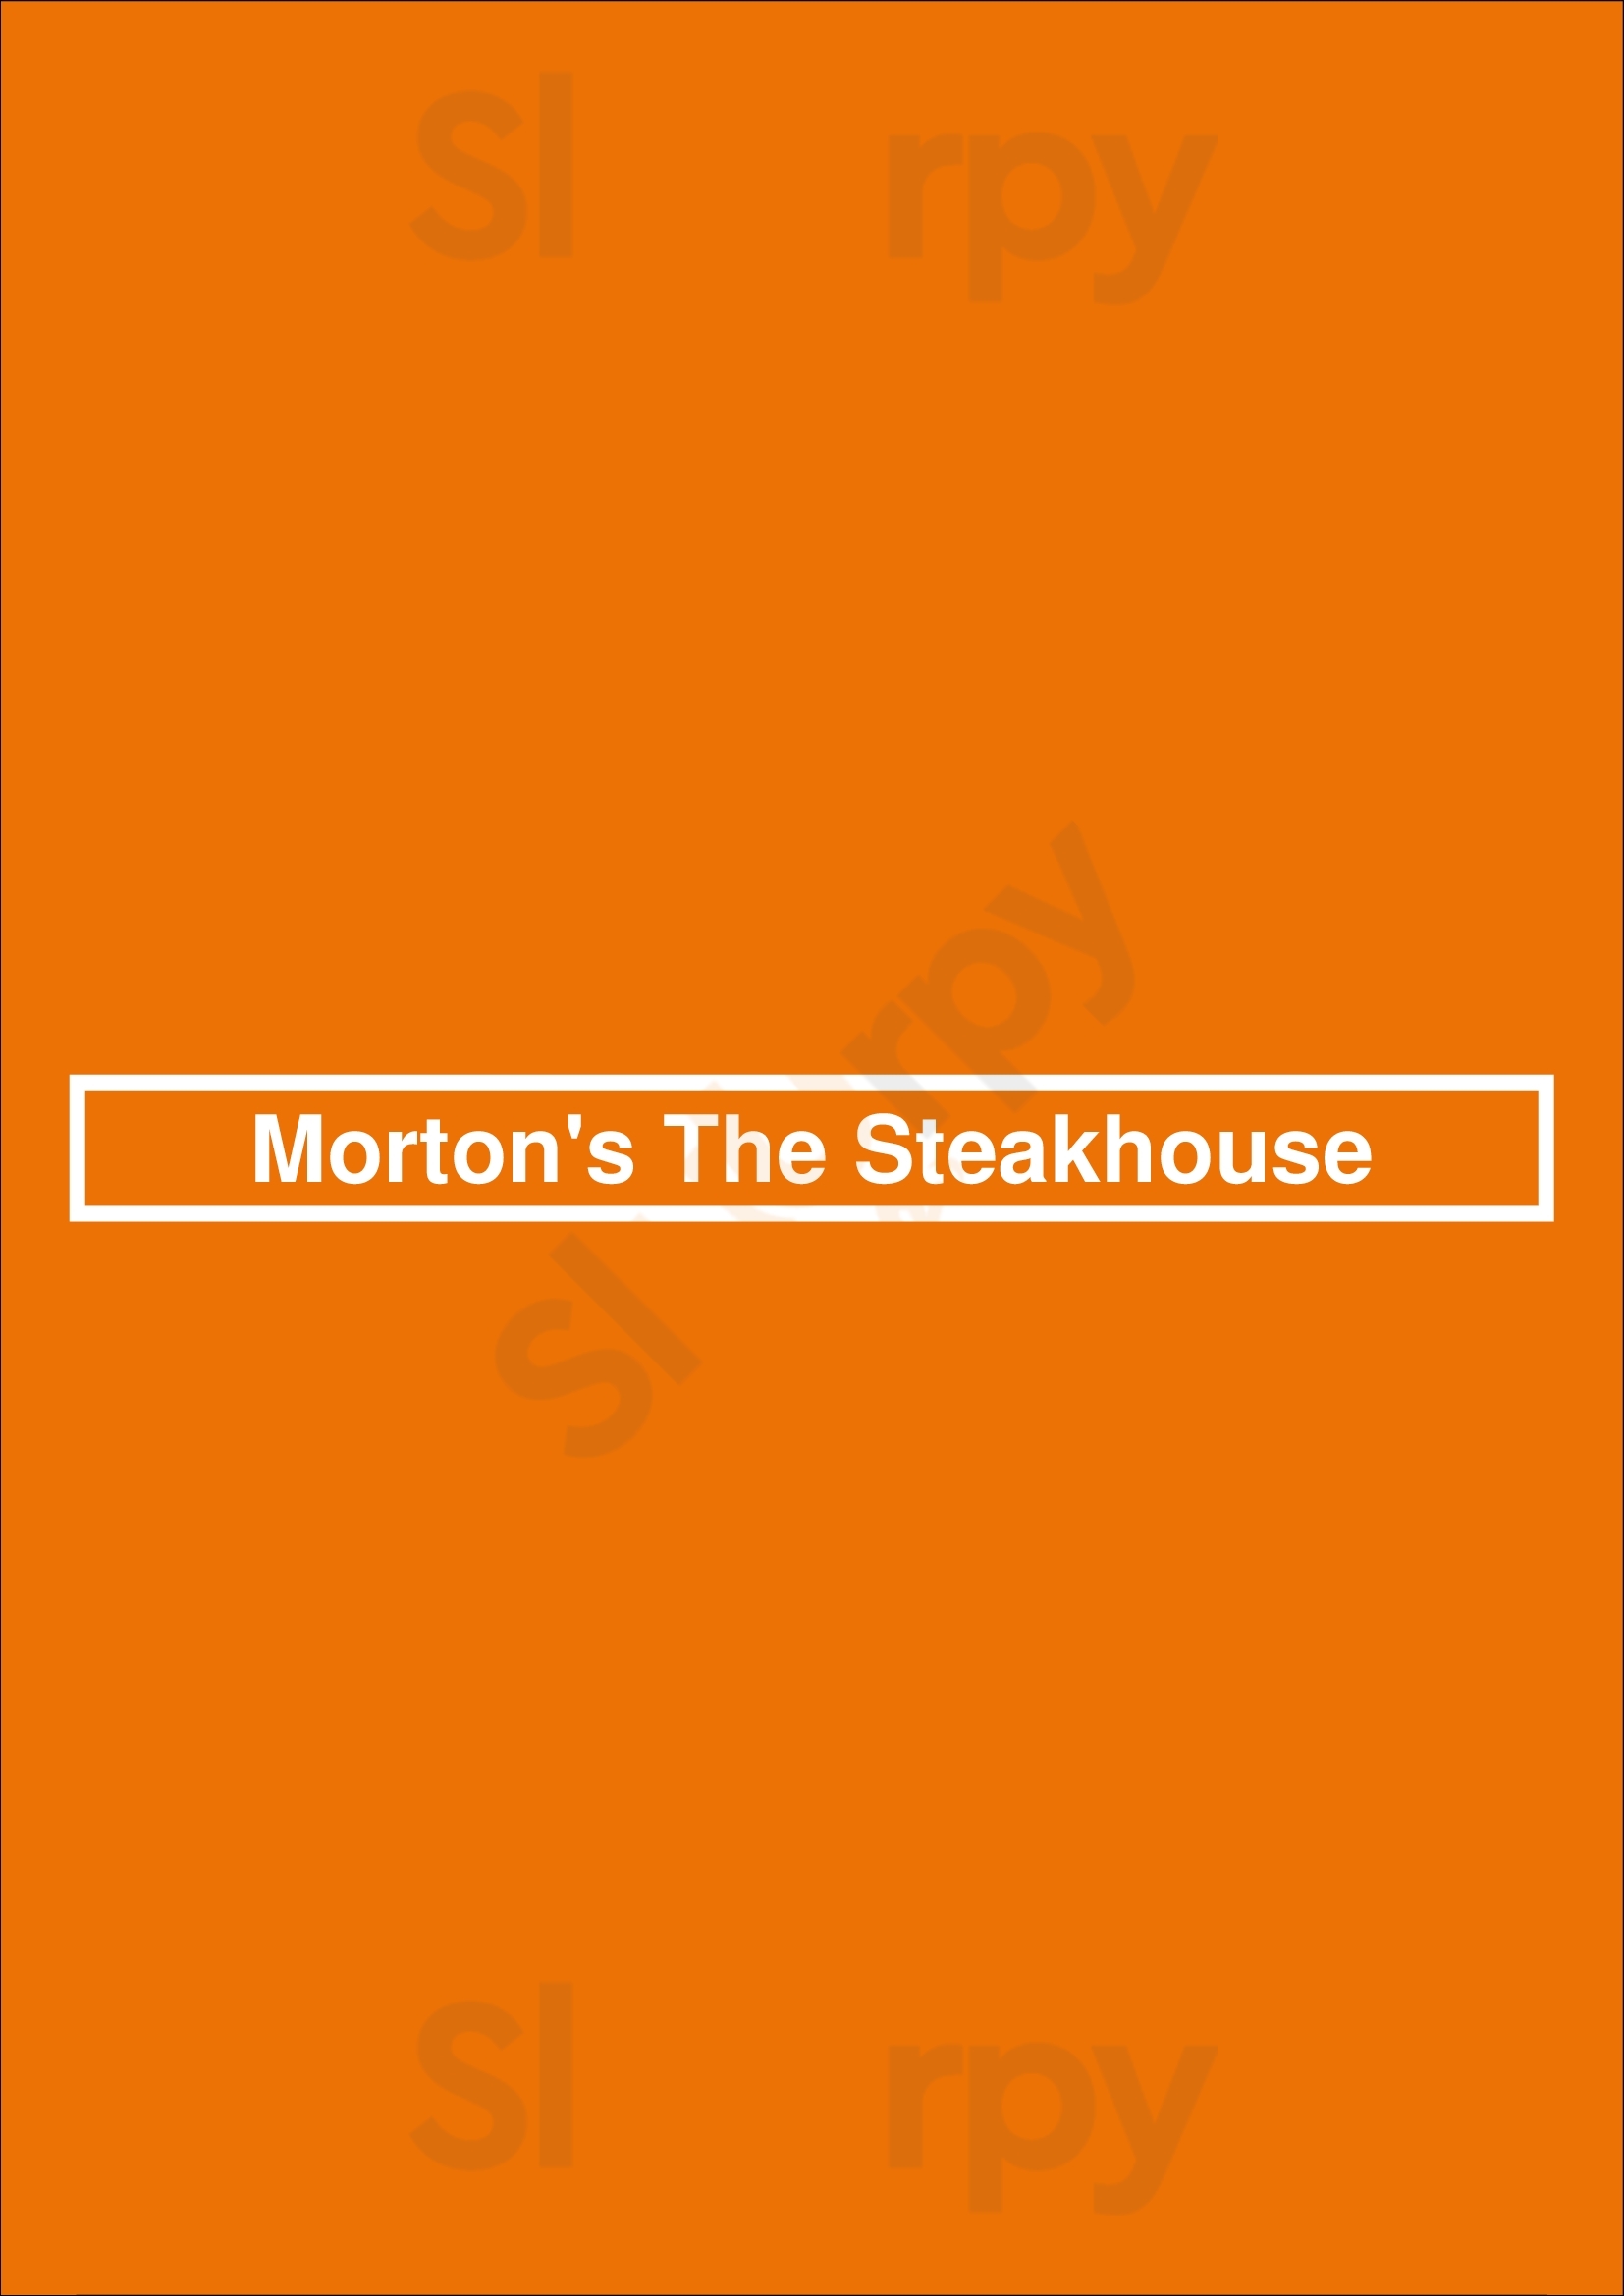 Morton's The Steakhouse Houston Menu - 1